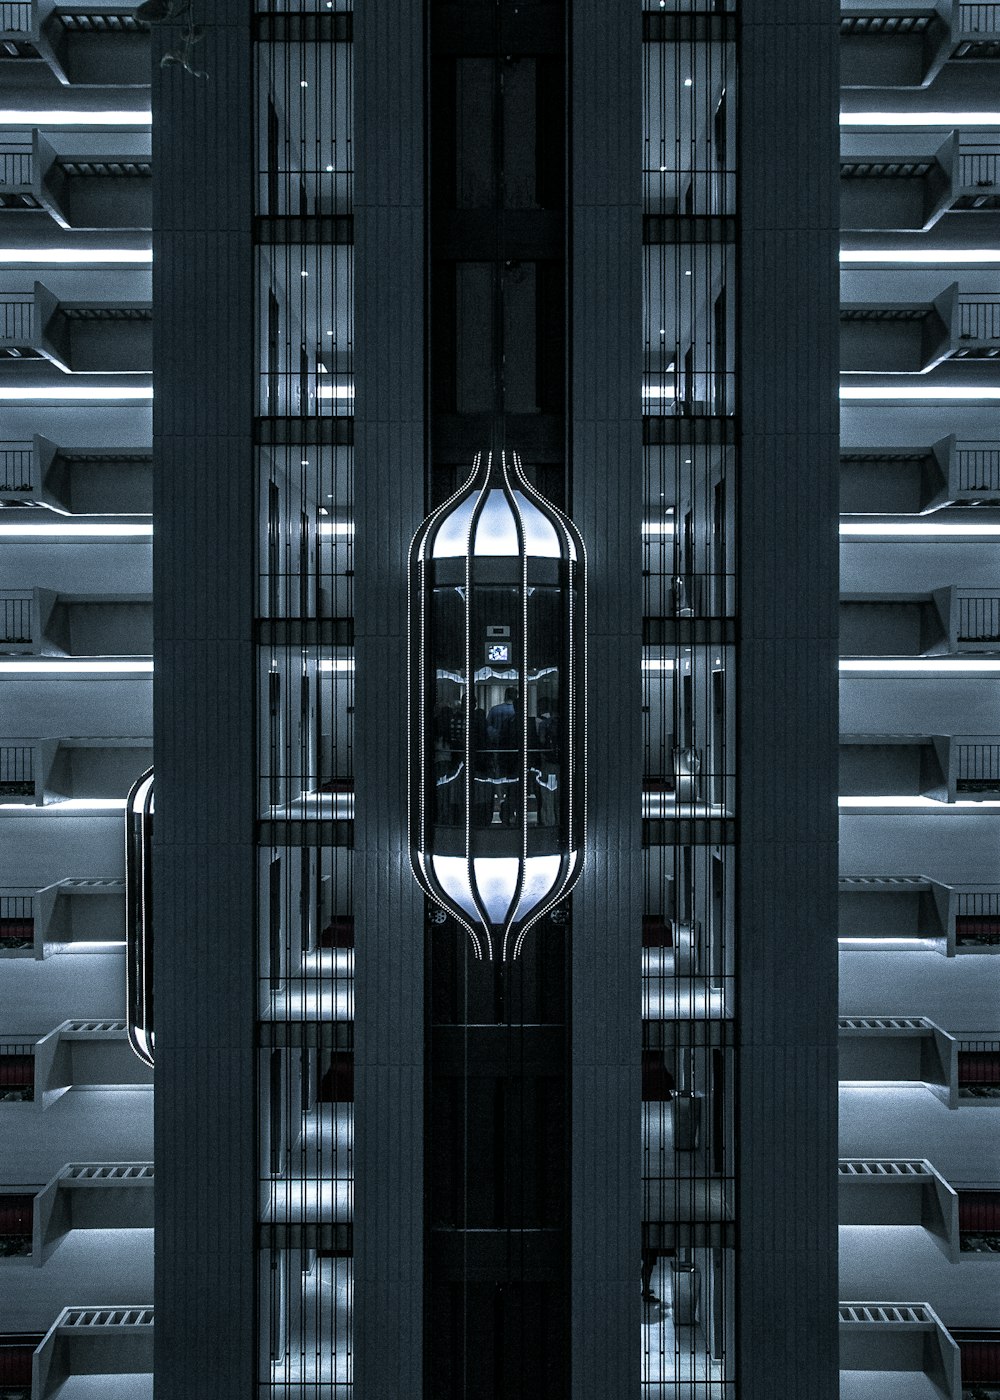 urban photo of an elevator